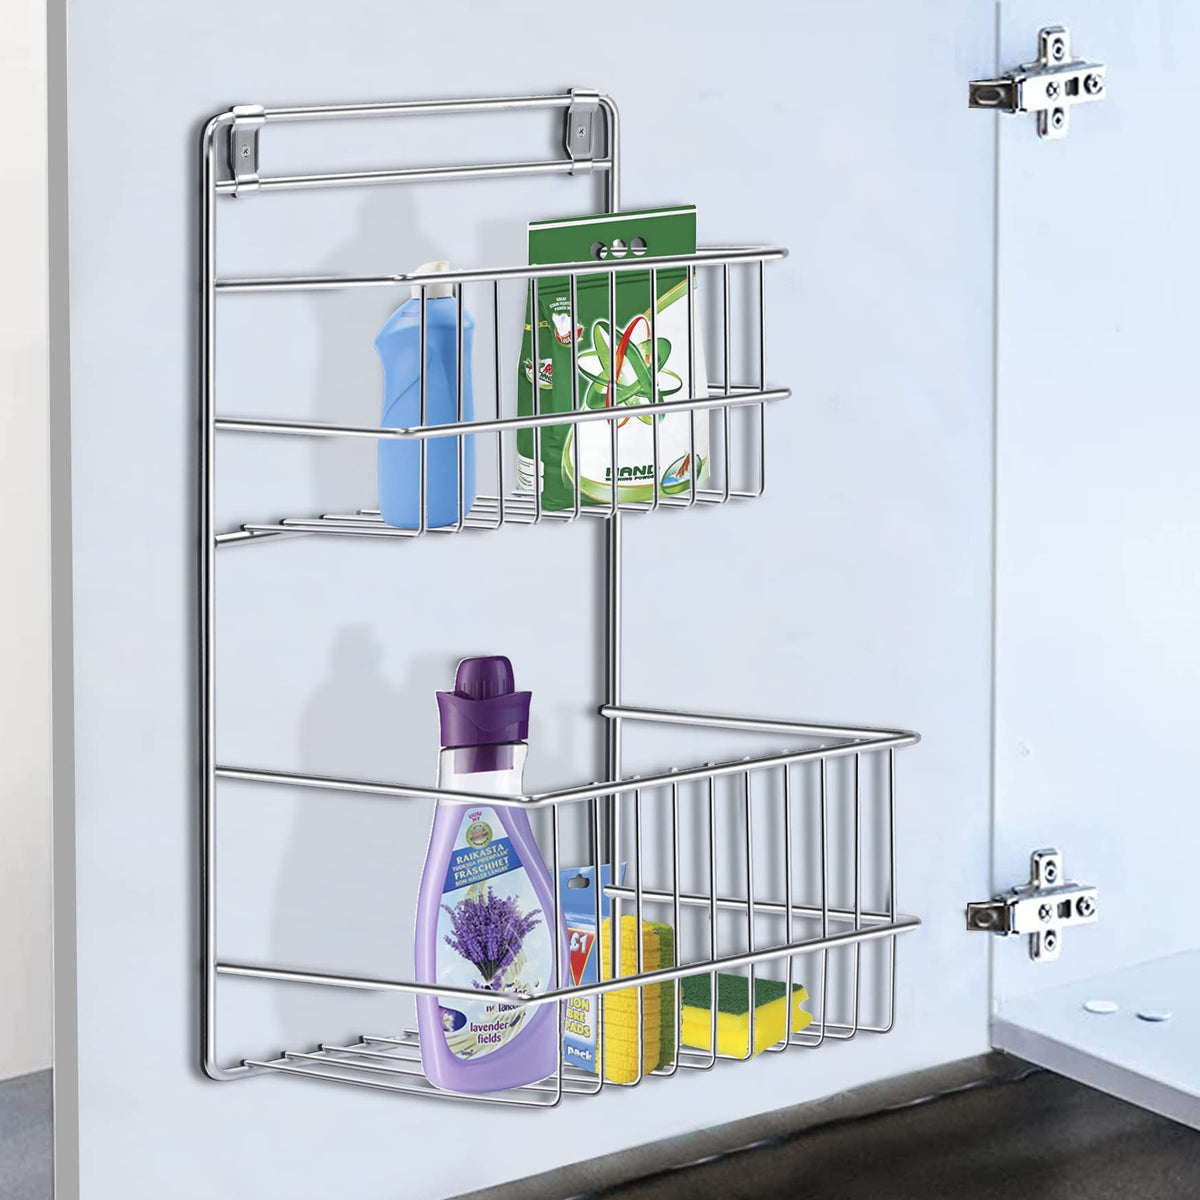 Plantex Stainless Steel Big Bathroom Detergent Holder/Bathroom Shelf/Bathroom Accessories (Chrome)